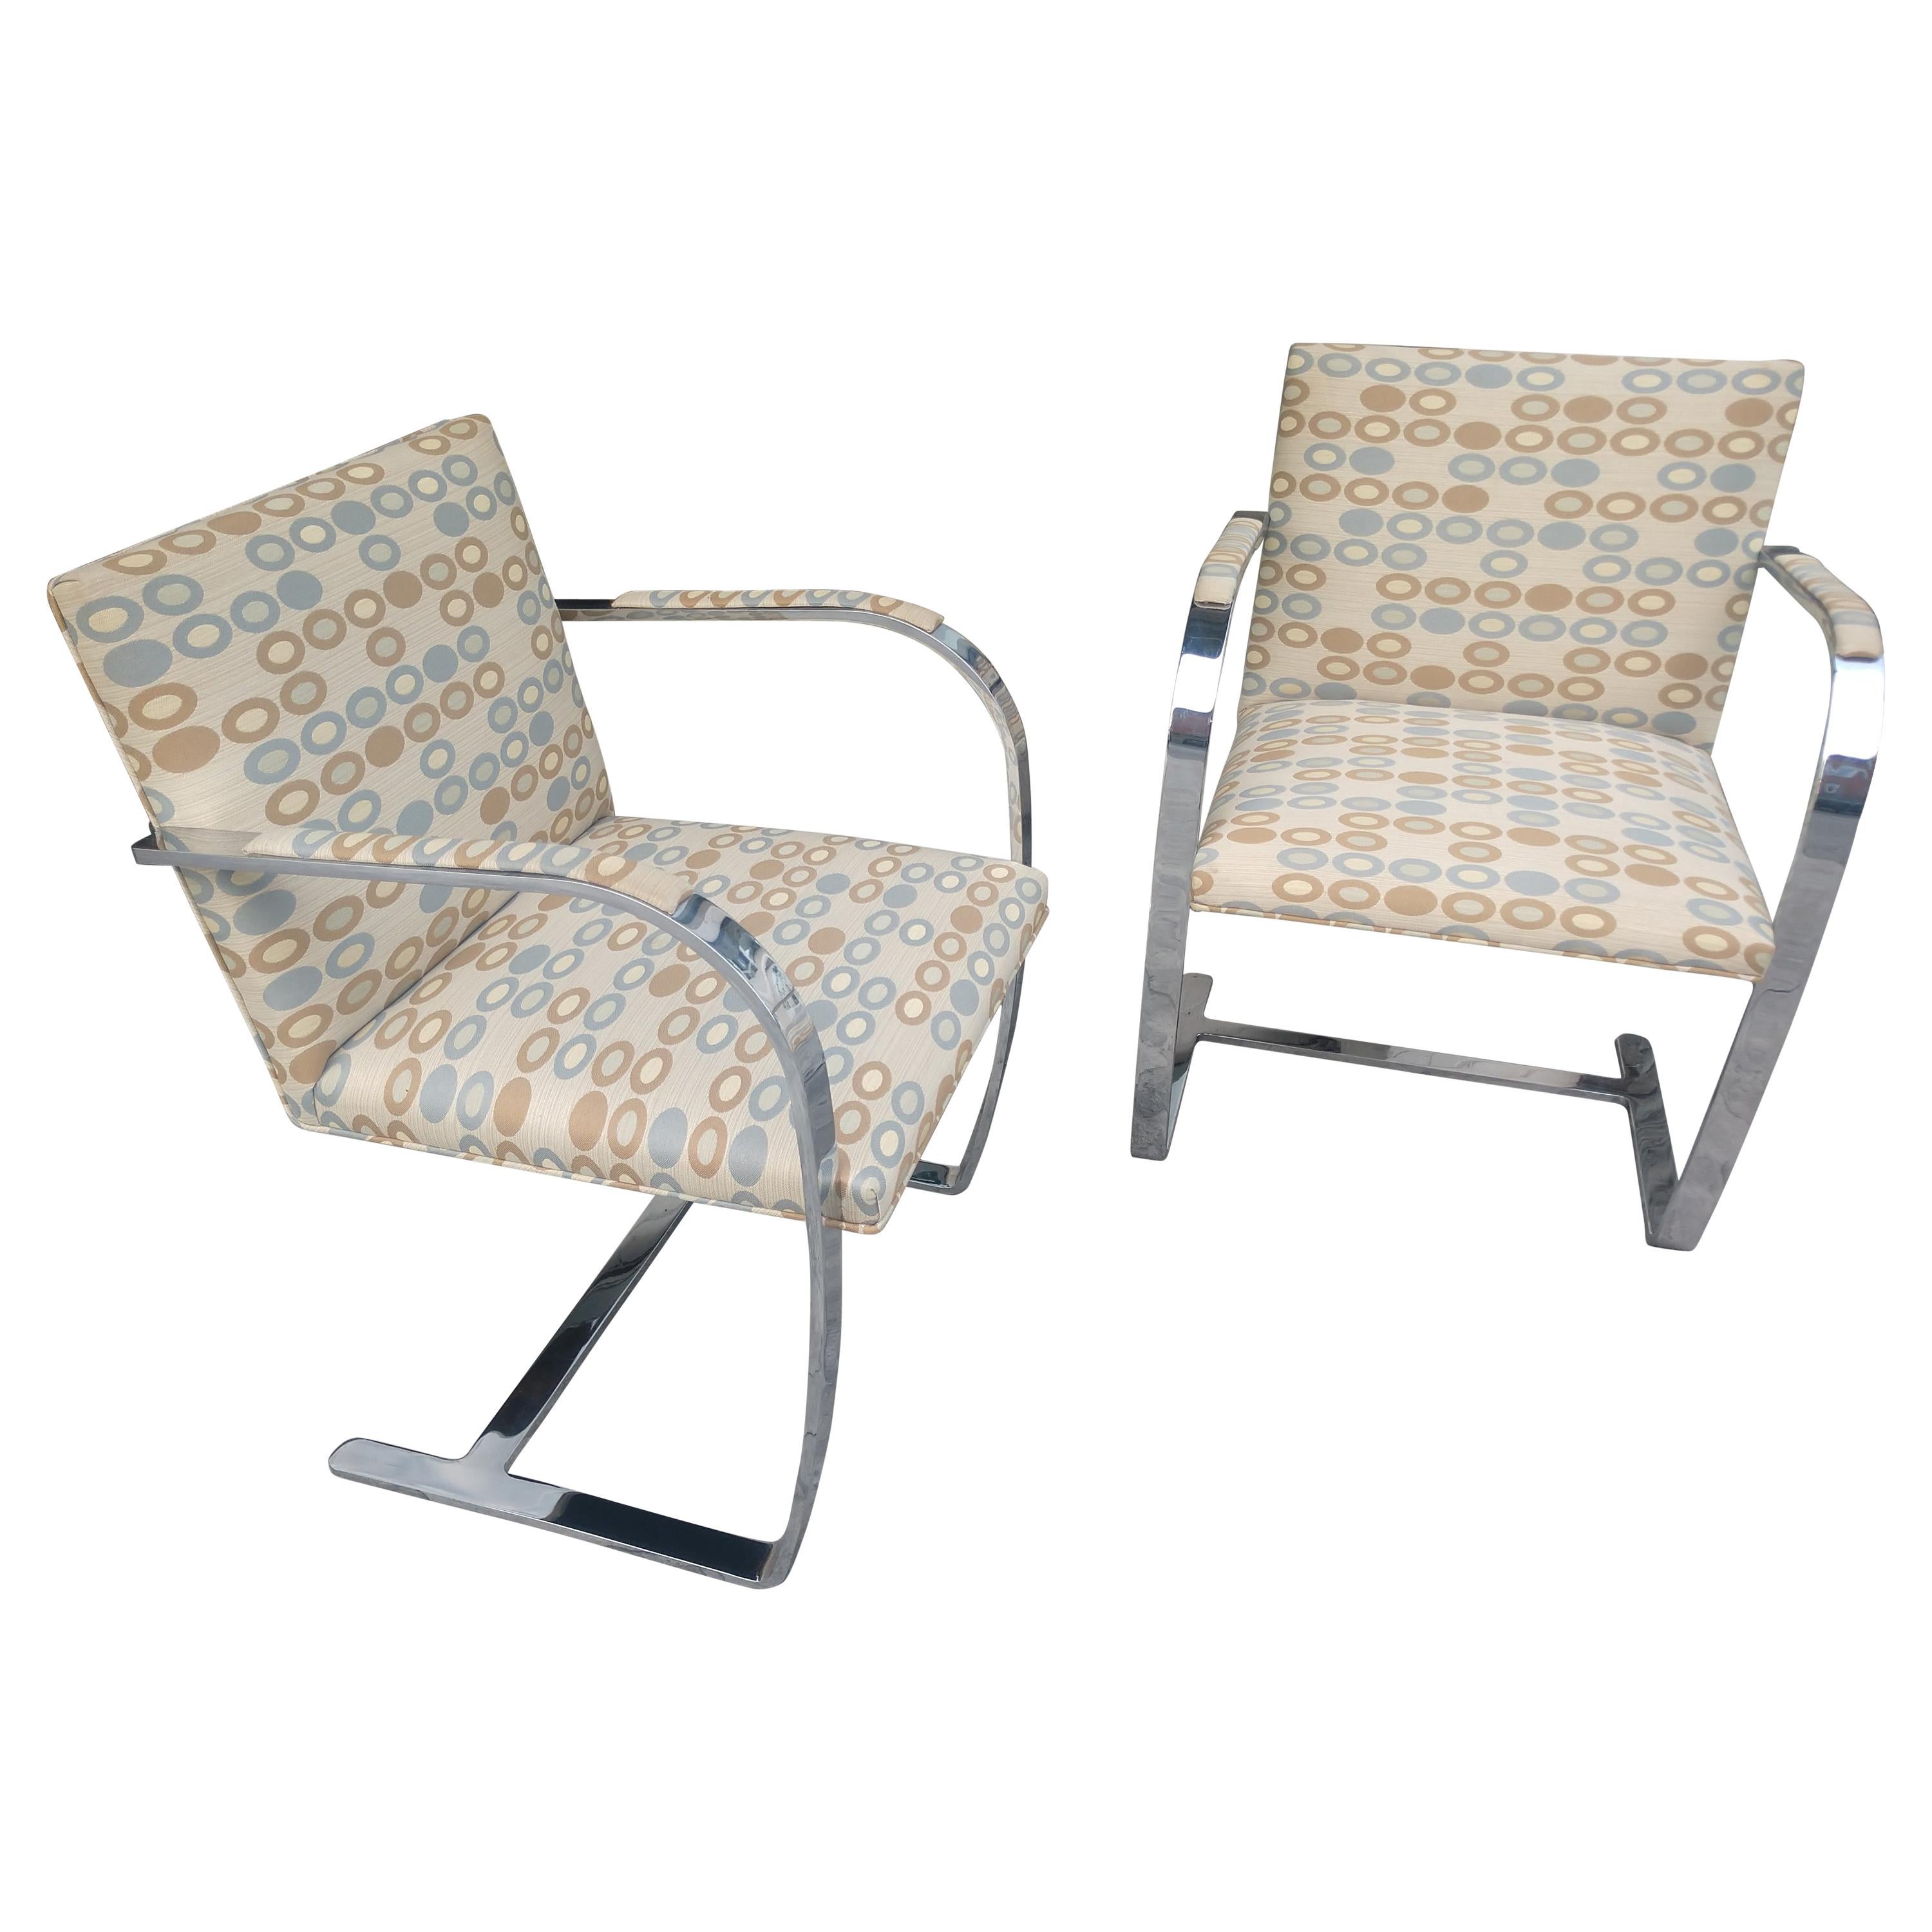 Pair of Ludwig Mies van der Rohe Brno Chairs